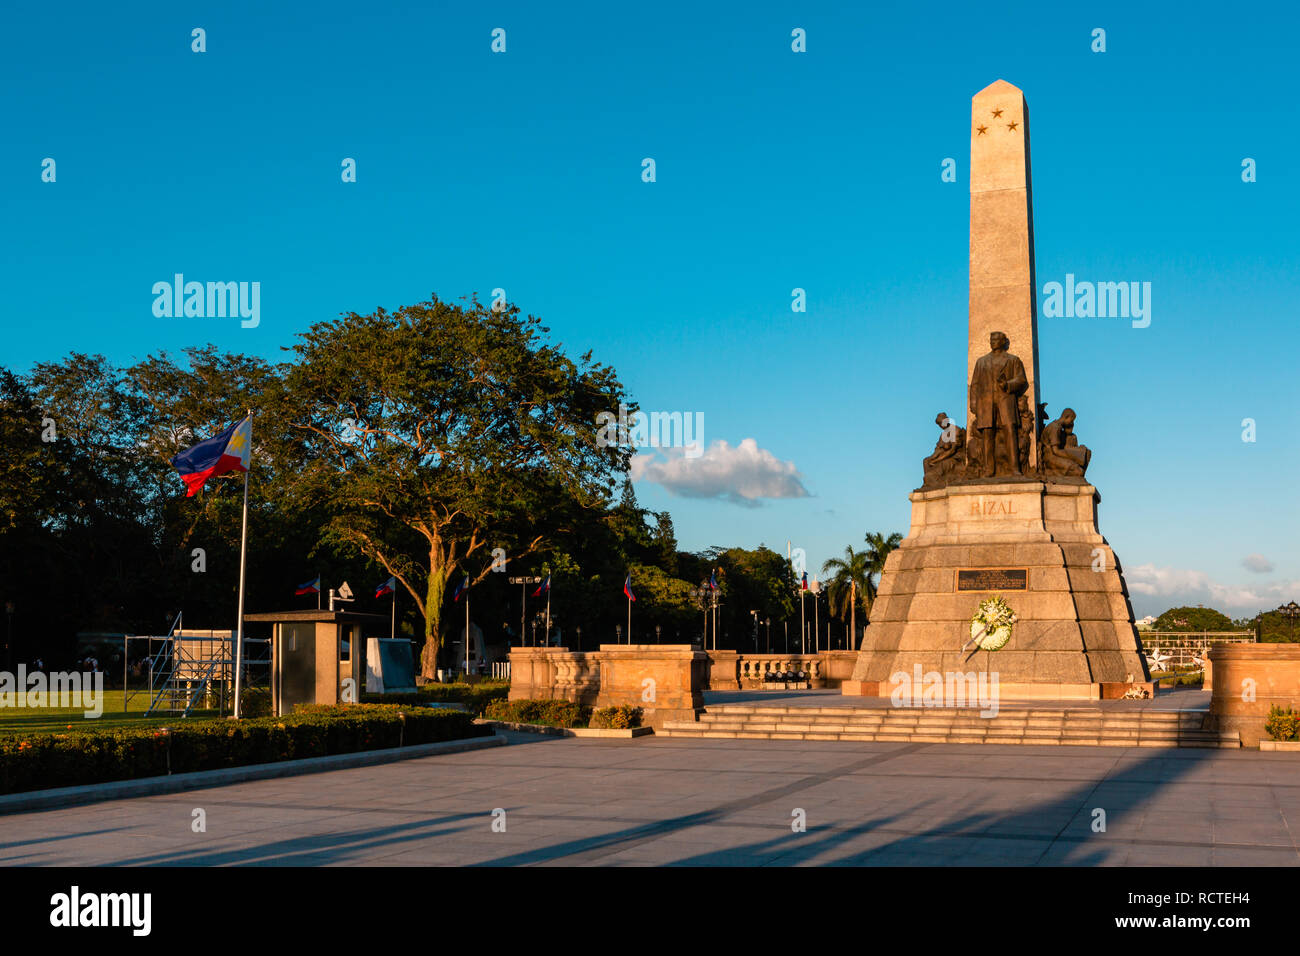 Monument in memory of Jose Rizal (National hero) at Rizal park in Manila, Philippines Stock Photo